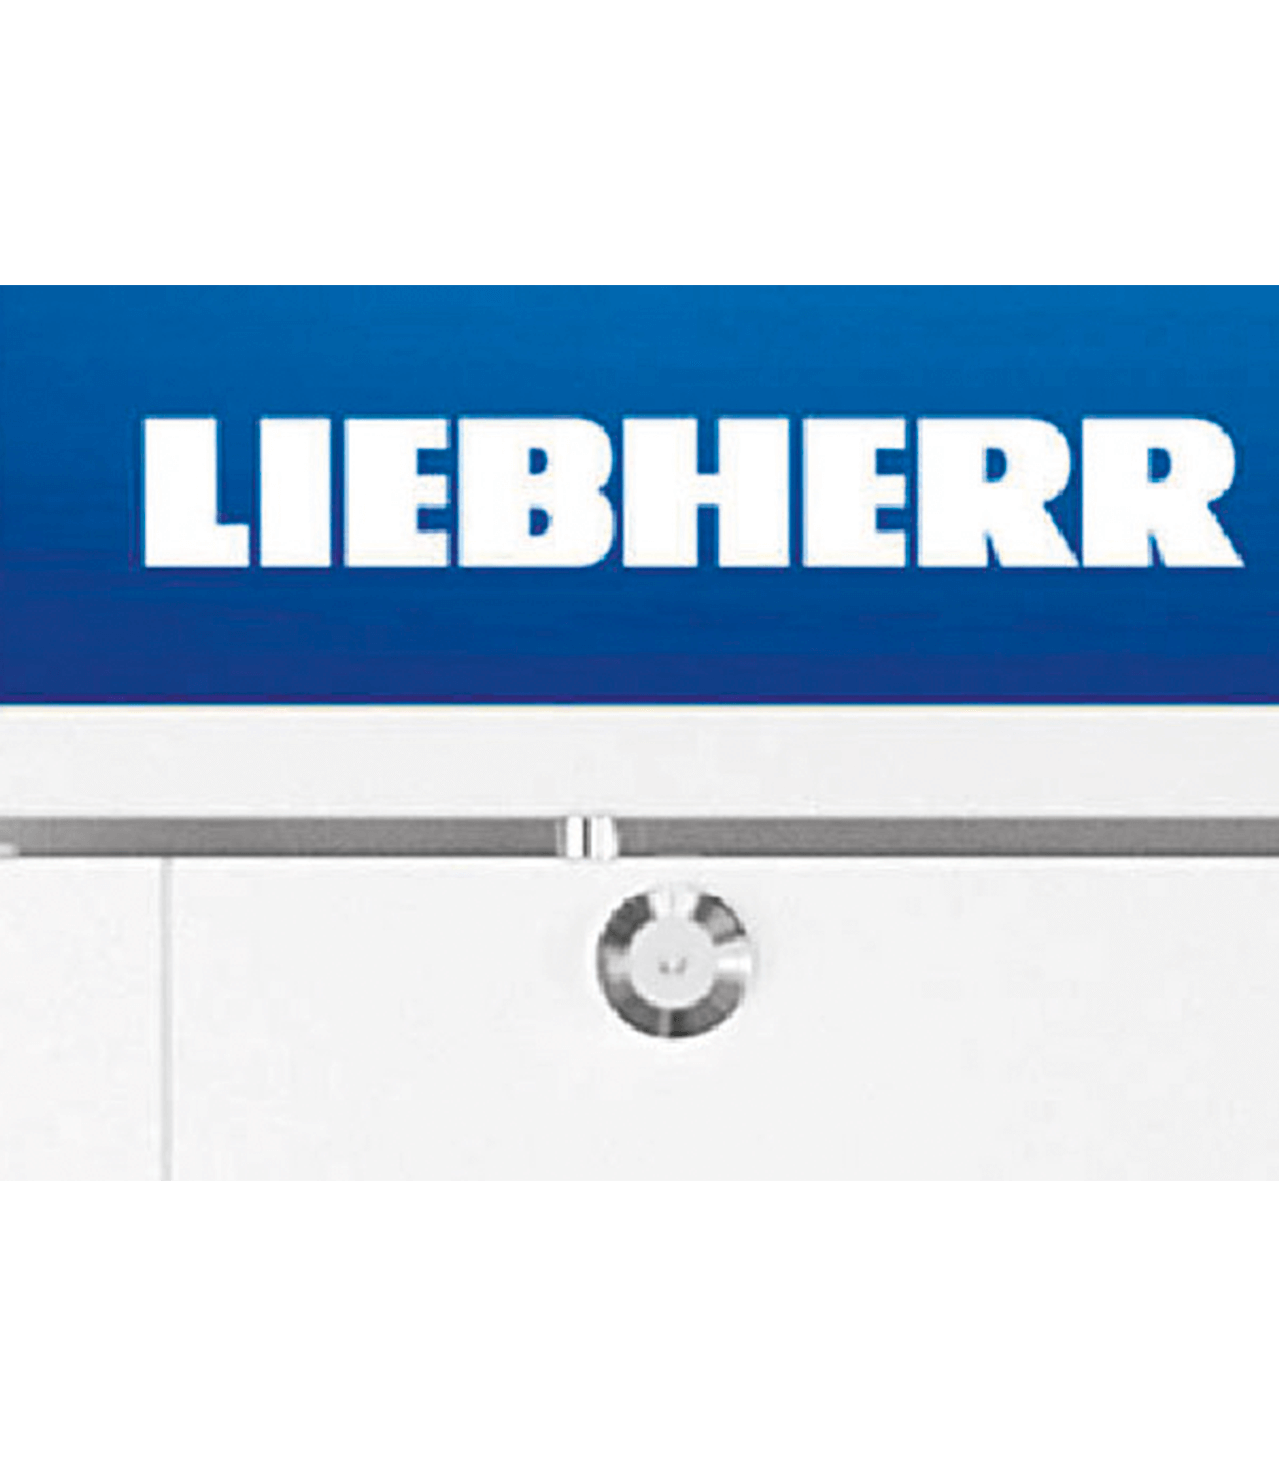 Armoire réfrigérée display Liebherr FKDV4213 blanc